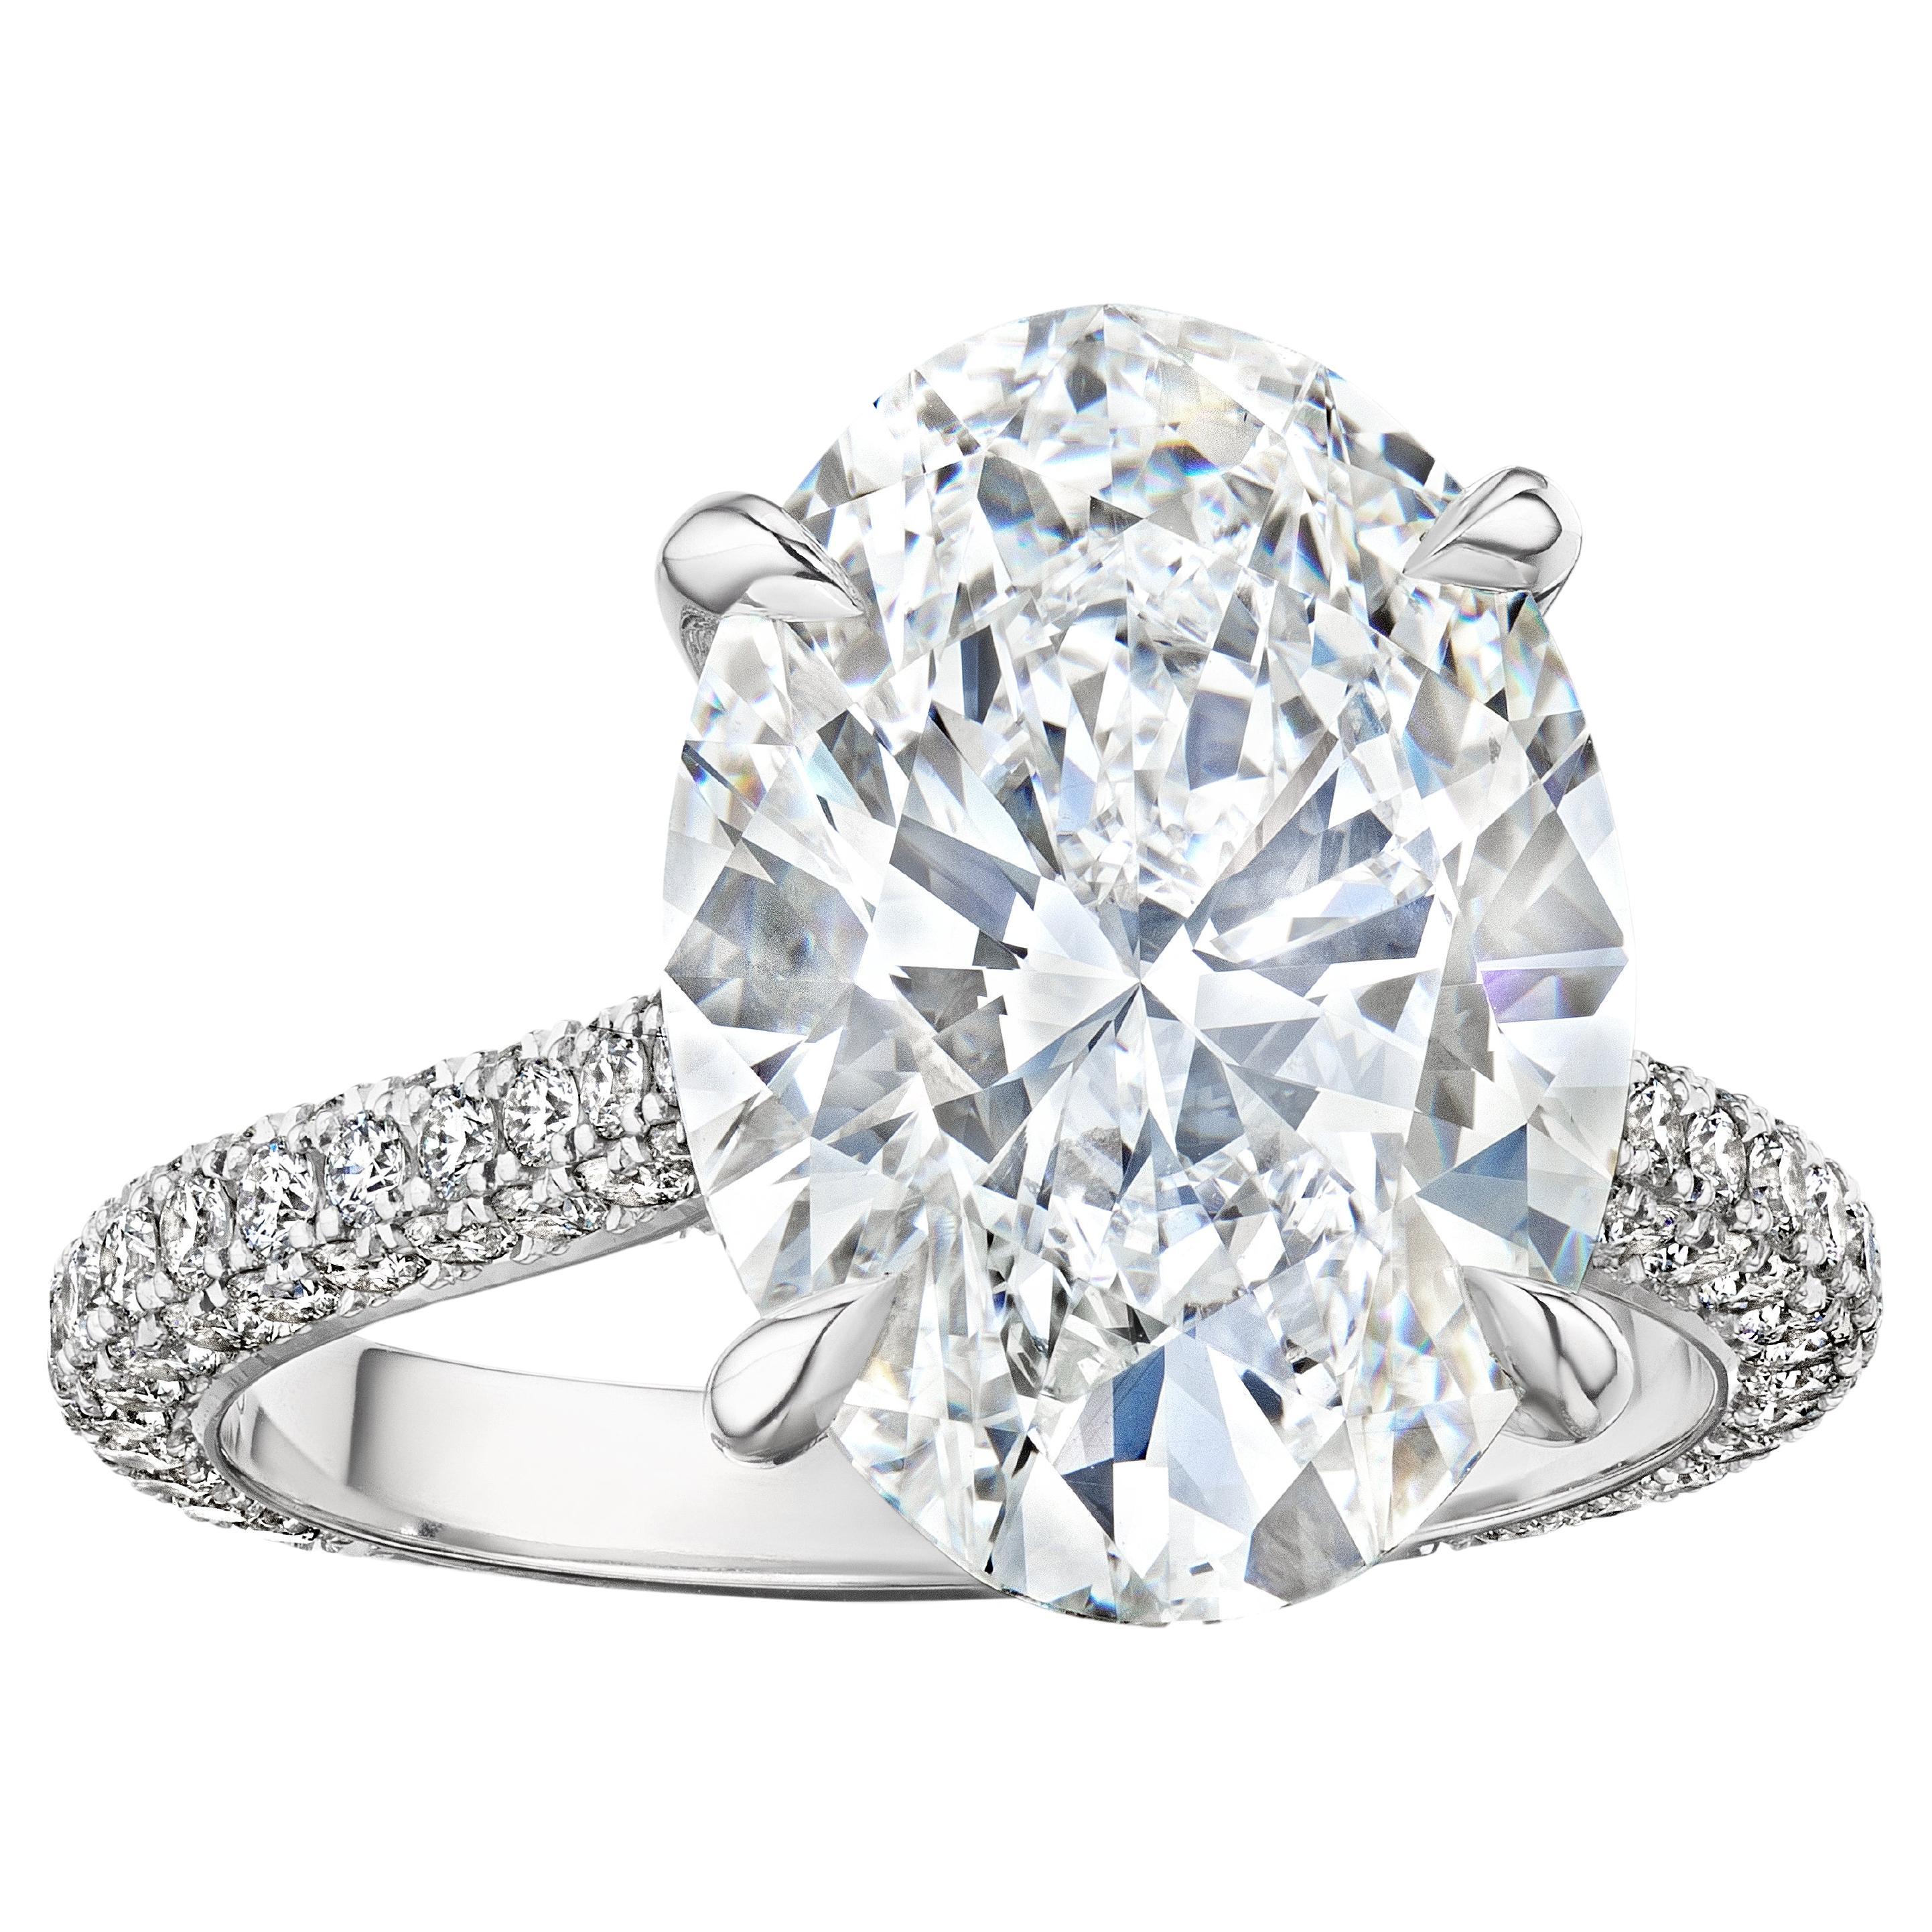 GIA Certified 6 Carat E SI1 Oval Diamond Engagement Ring "Alexandria"